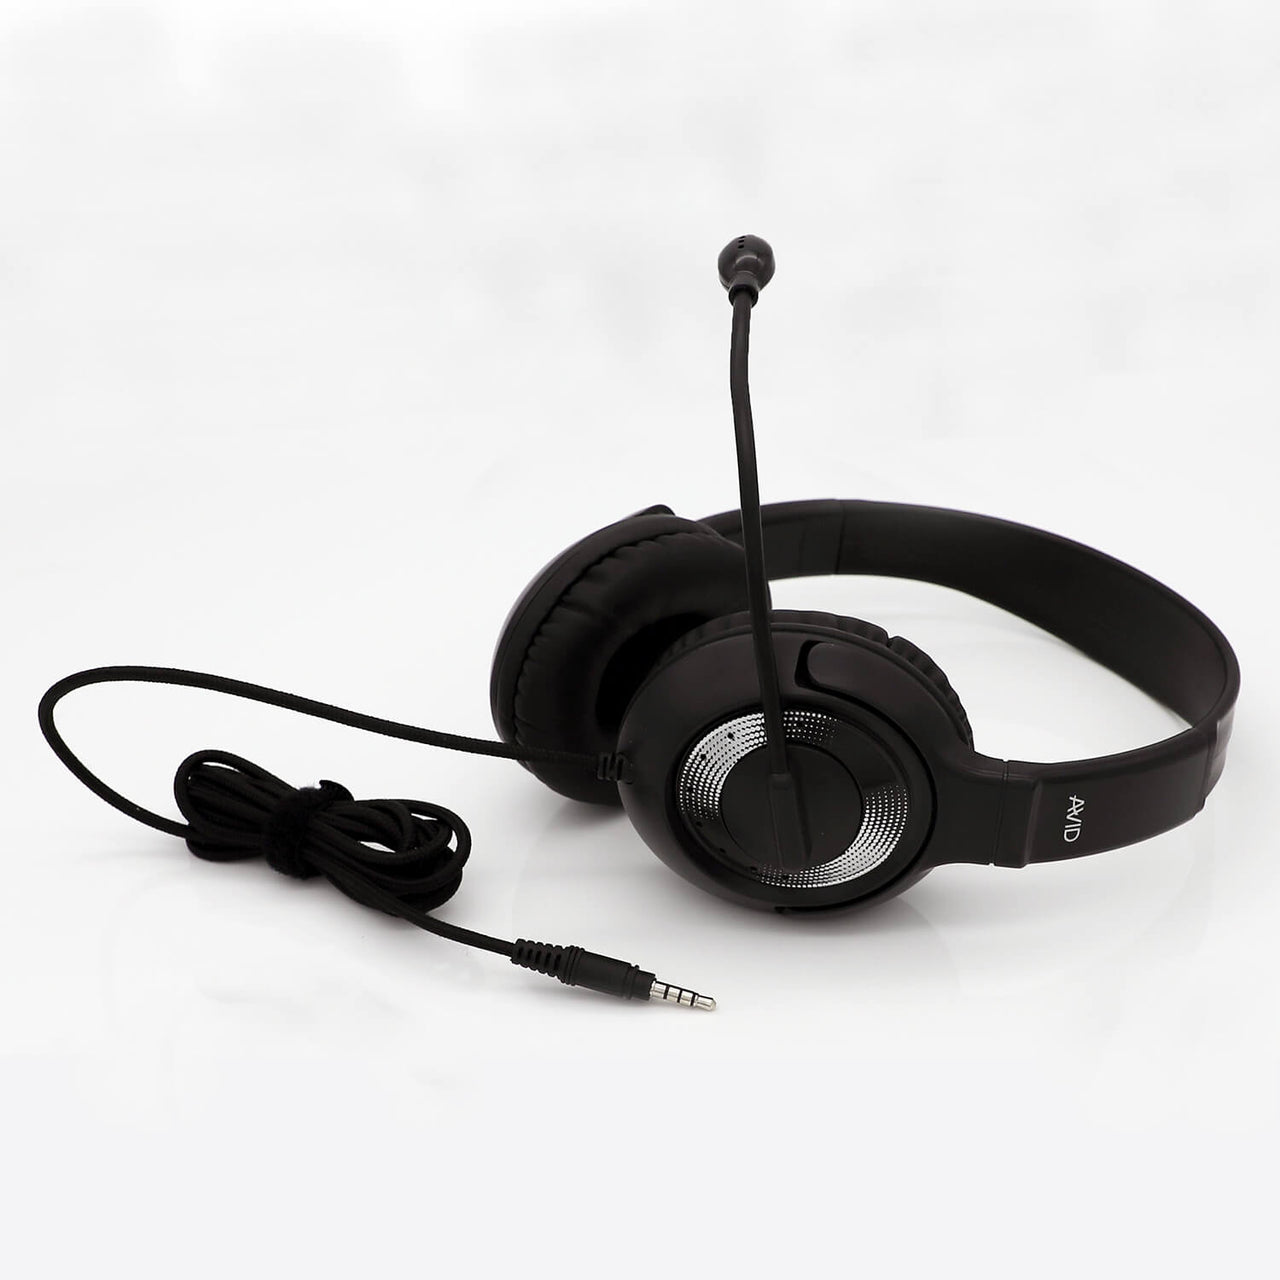 School Testing Headset with 3.5mm Plug (Black/Silver) - Learning Headphones